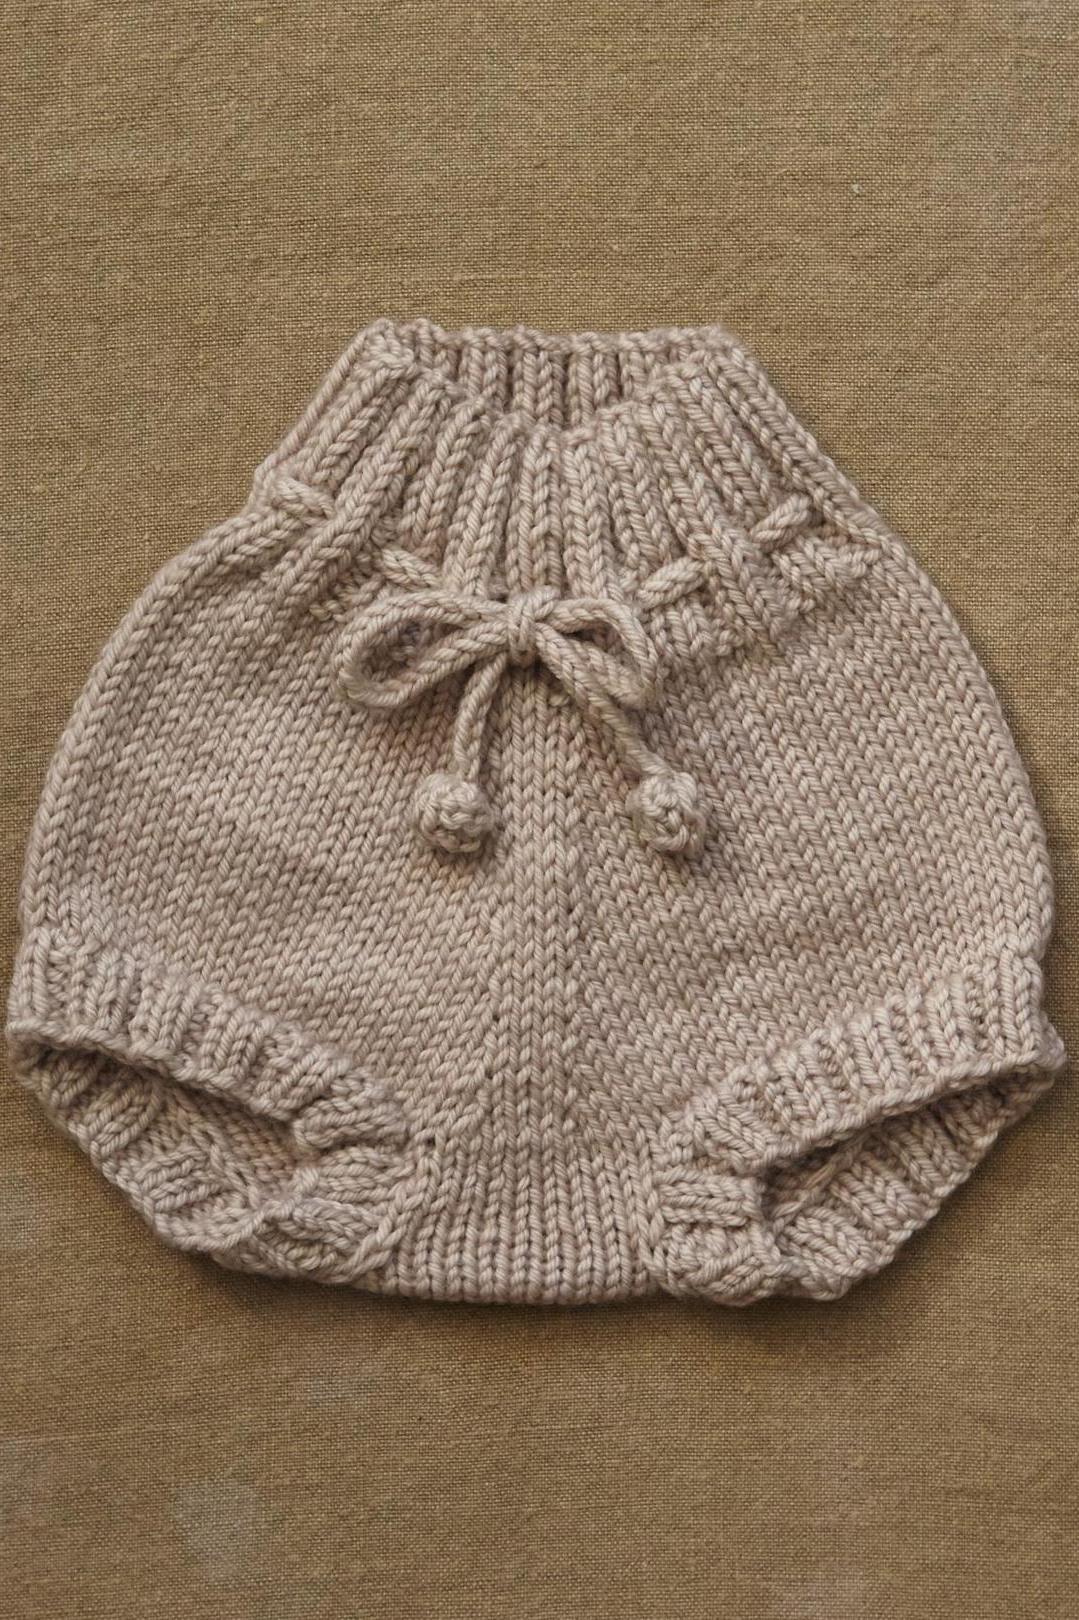 Baby Headband Knitting Patterns- In the Loop Knitting